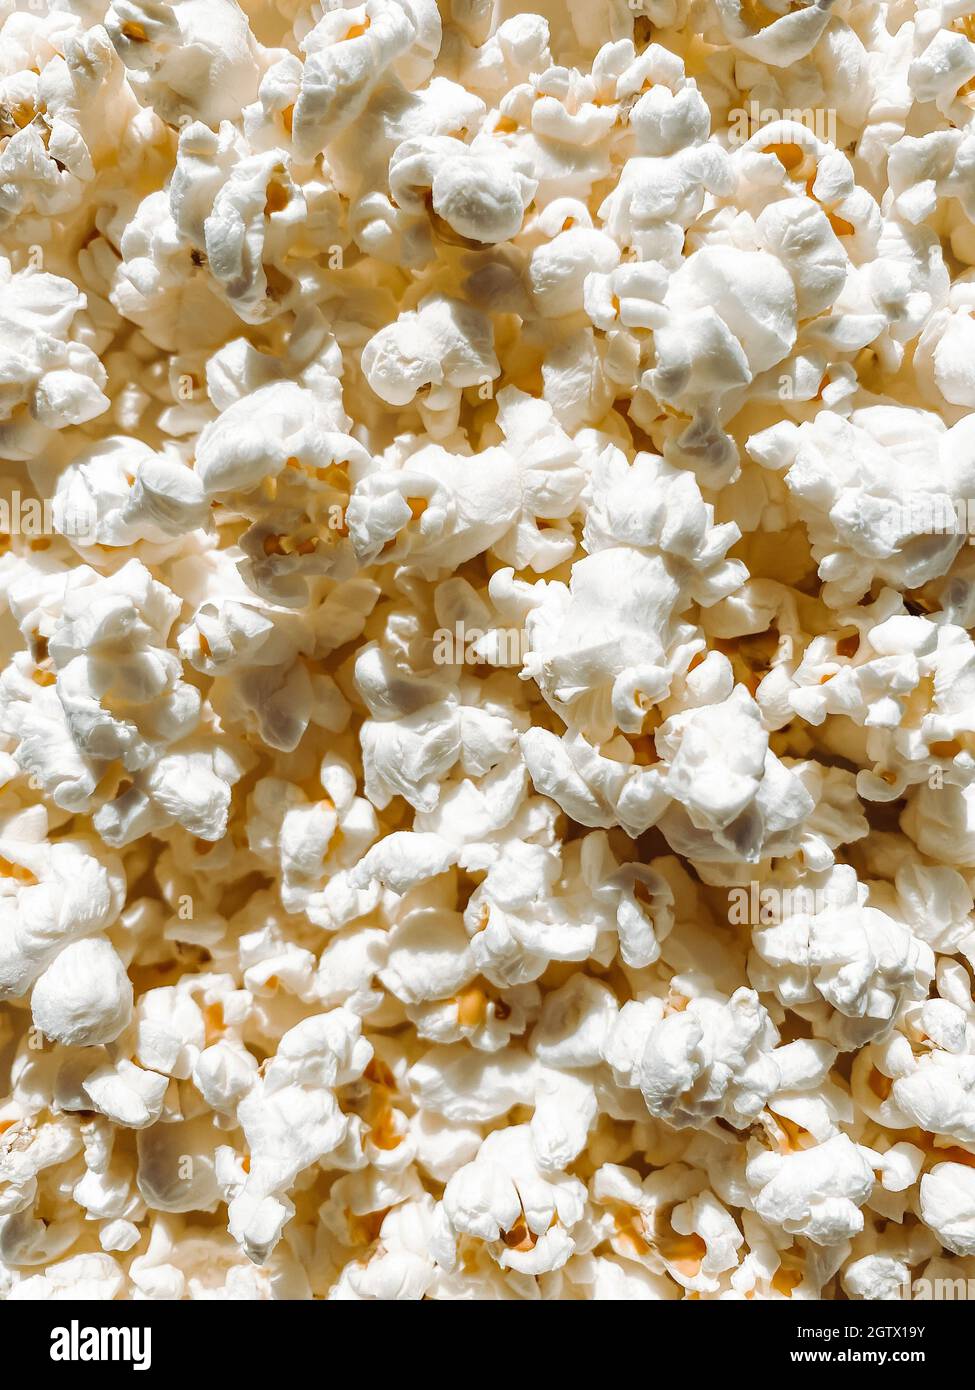 Download wallpaper 3840x2160 popcorn snack bowl 4k uhd 169 hd background